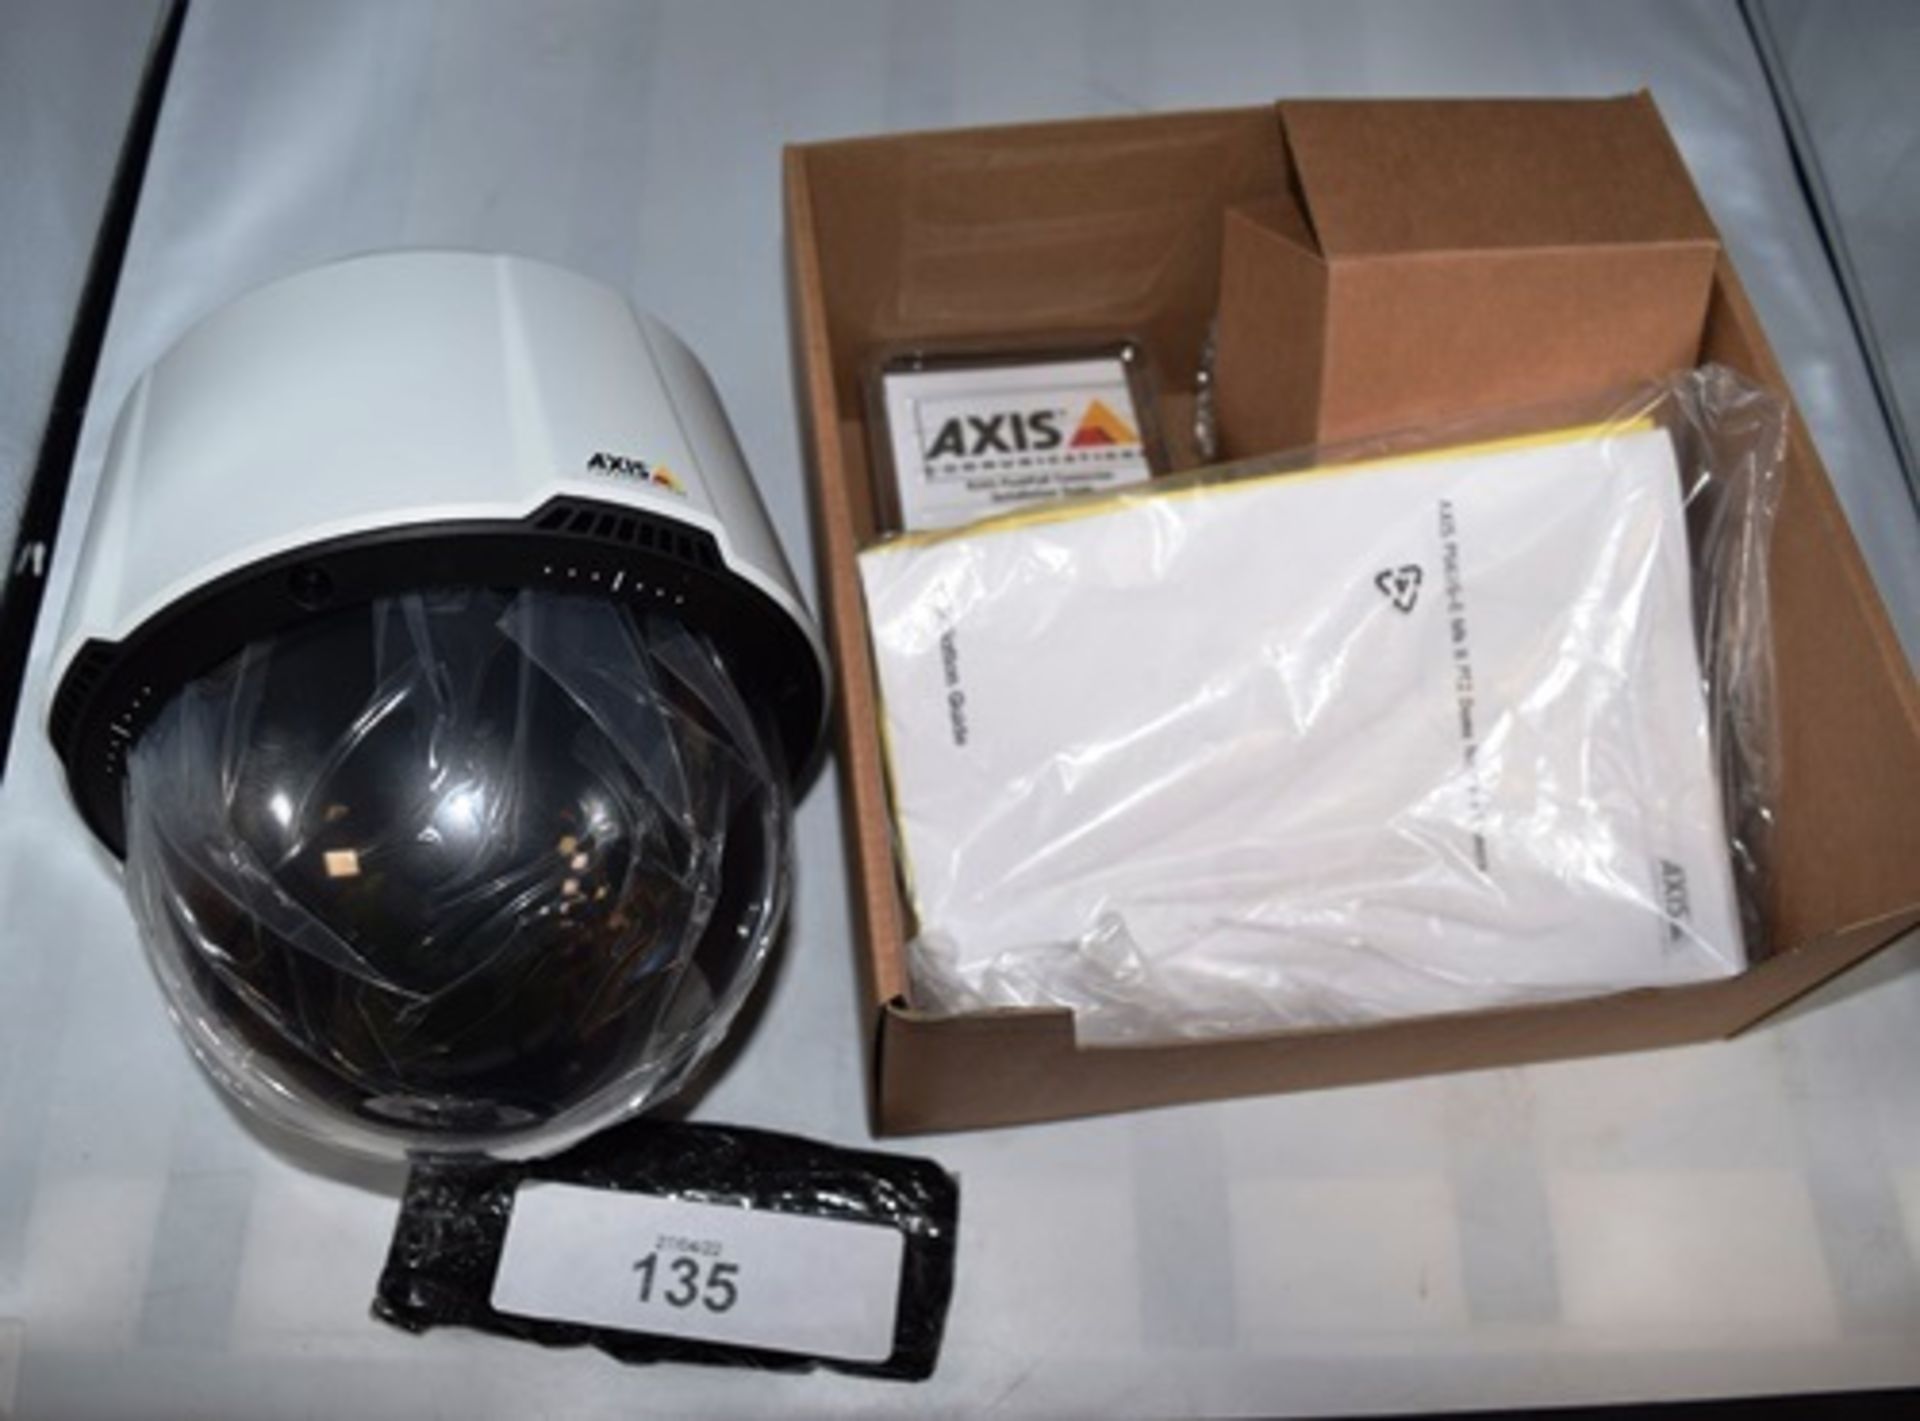 1 x Axis P5635-E MKII 50kz PTZ dome network camera, P.N. 0930-001 - New in box (FST1)